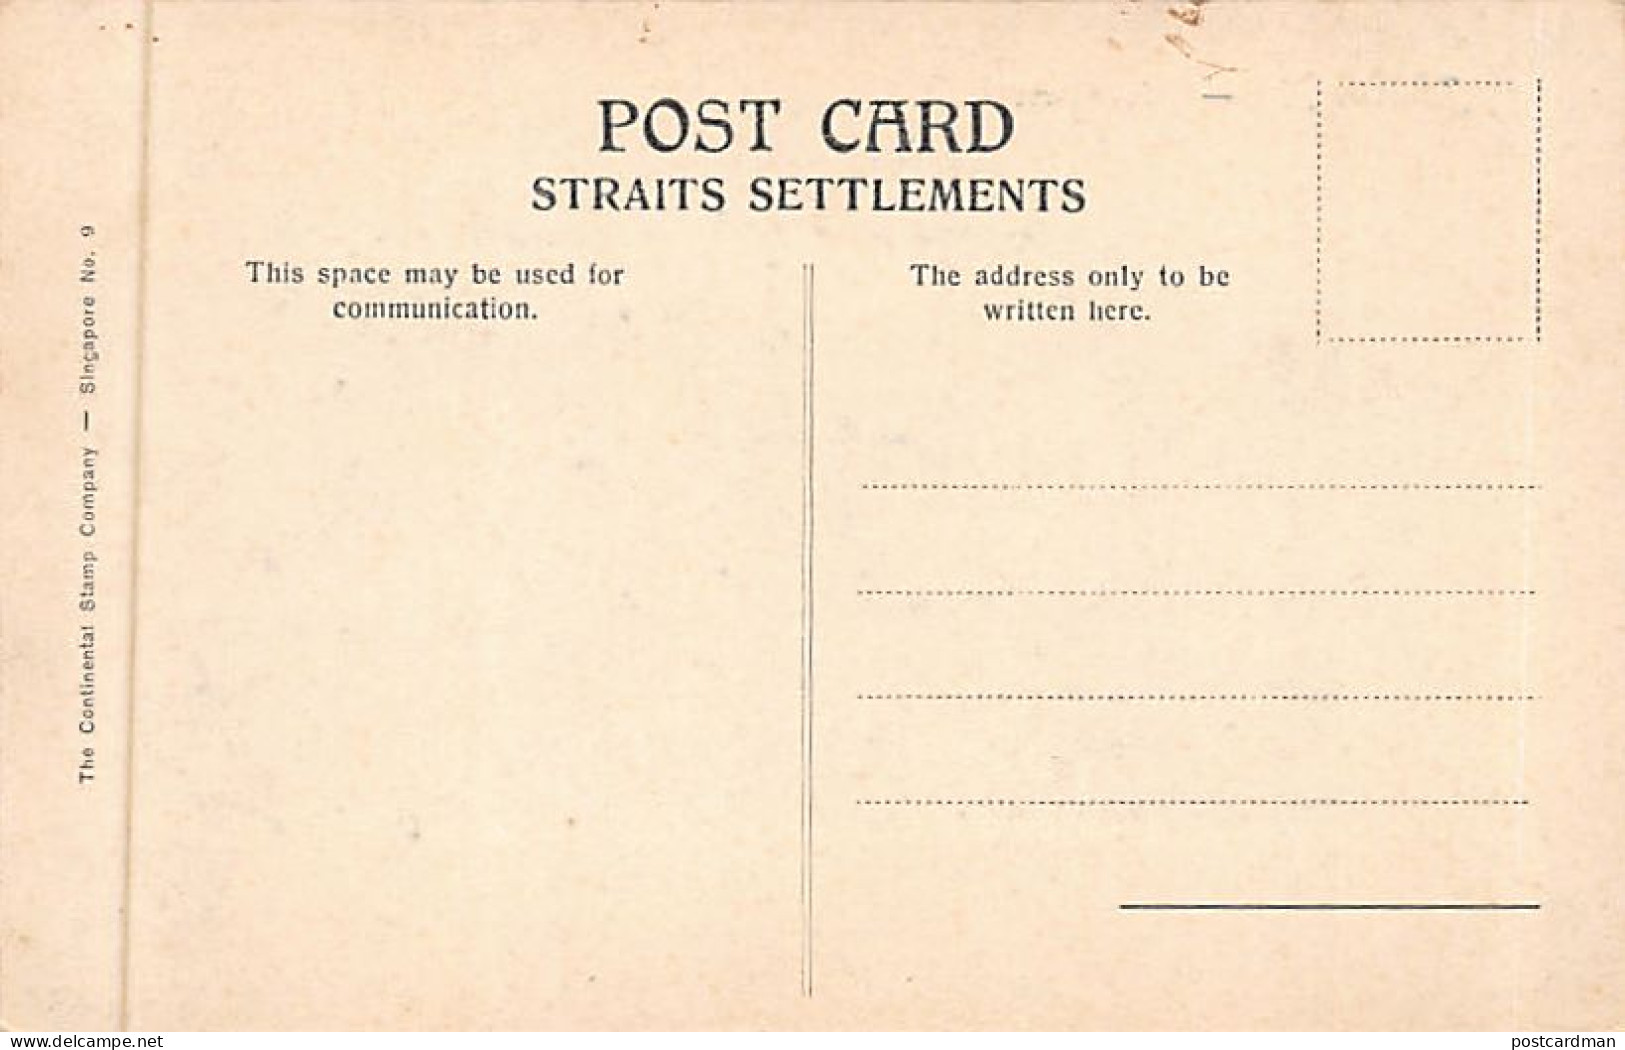 Singapore - Johnson Pier - Publ. The Continental Stamp Co. 9 - Singapour